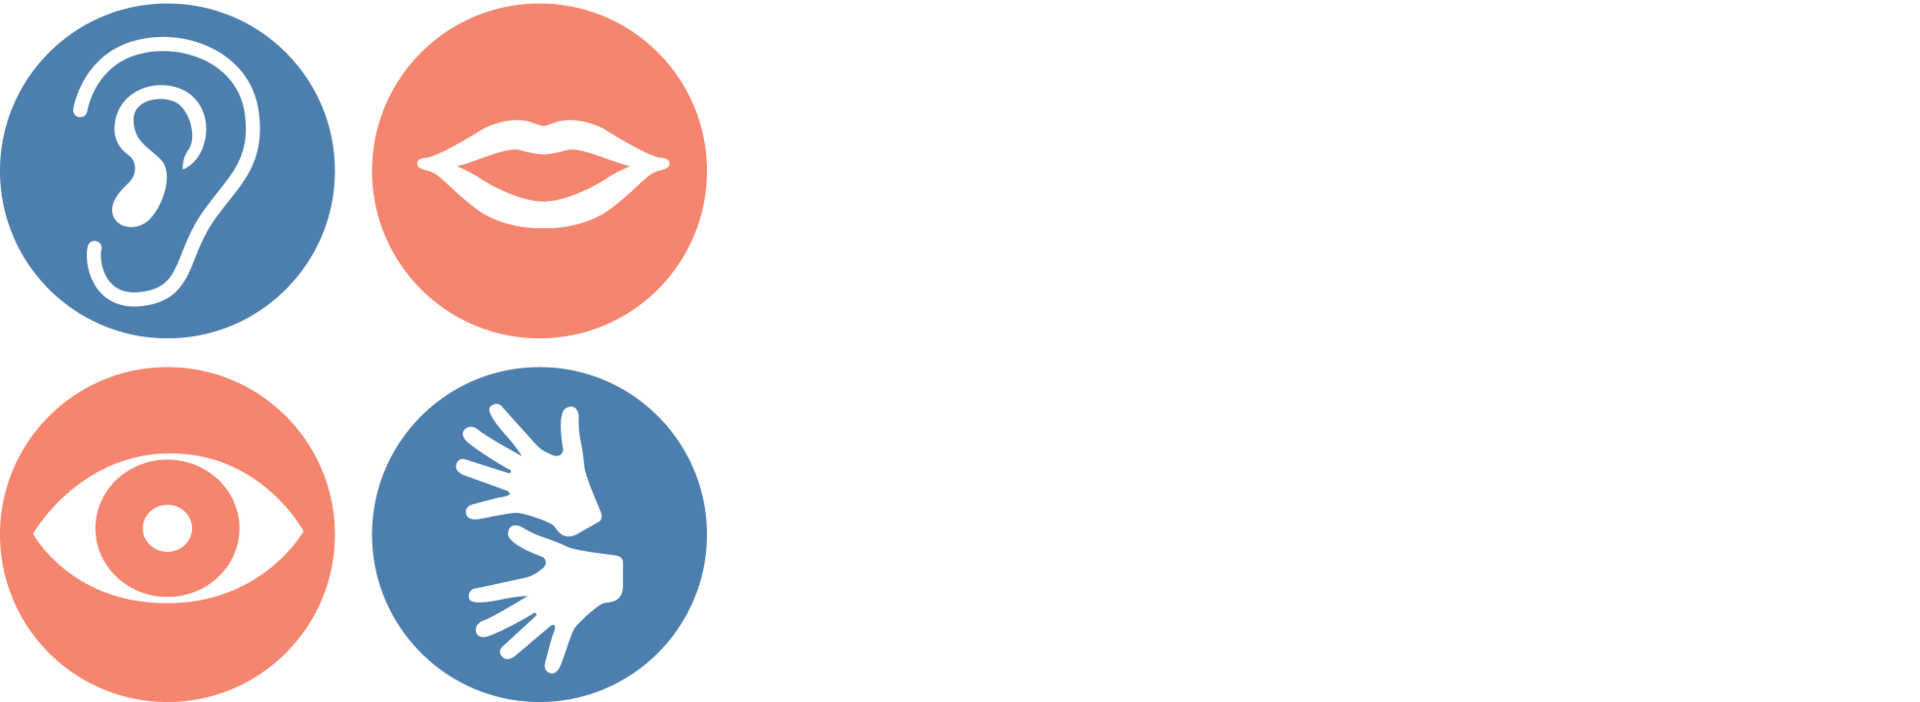 Hörtherapiezentrum Praxis Hanik in München